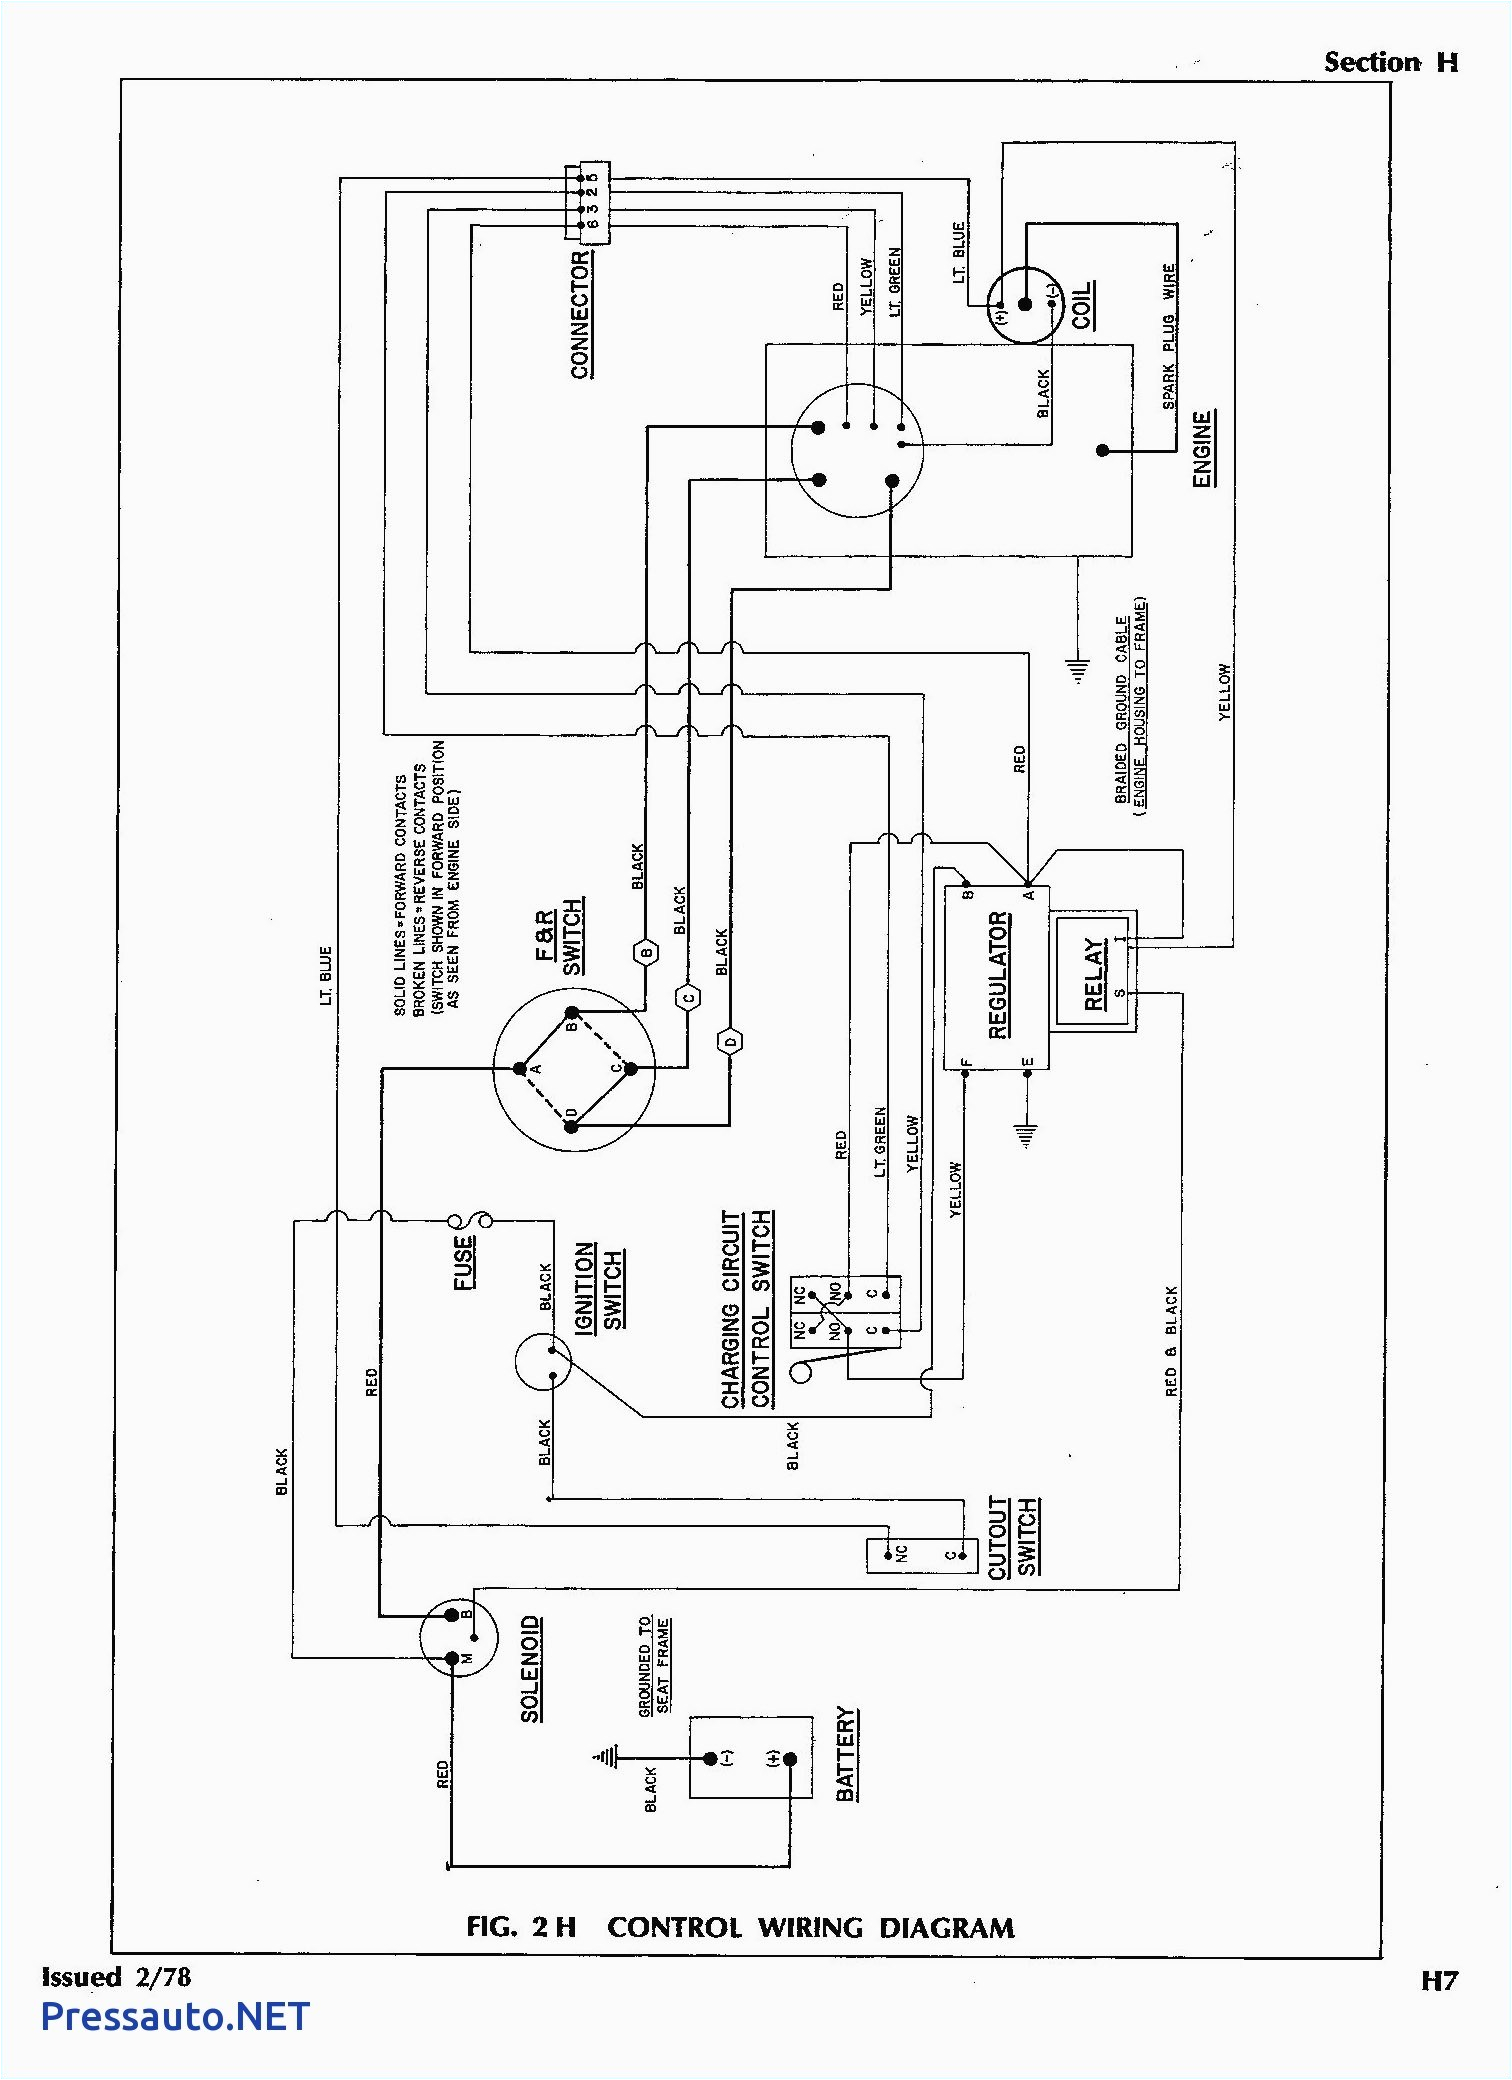 1990 ezgo wiring diagram wiring diagram blog 11 top 1990 ezgo wiring diagram